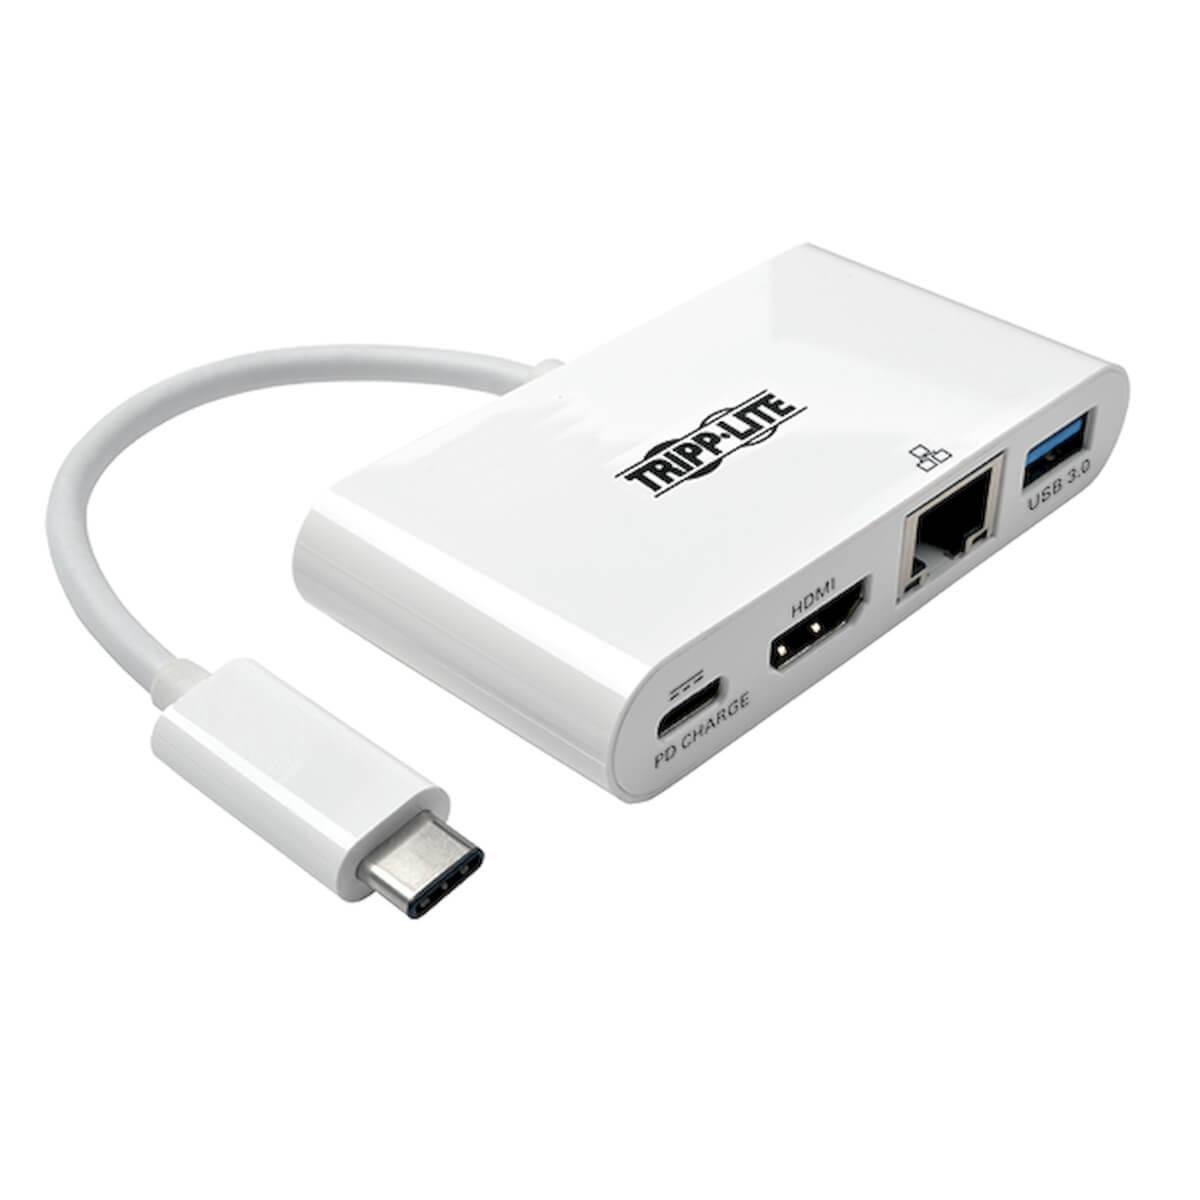 Tripplite Mini dokovací stanice USB-C / HDMI, USB 3.0, GbE, 60W nabíjení, HDCP, bílá